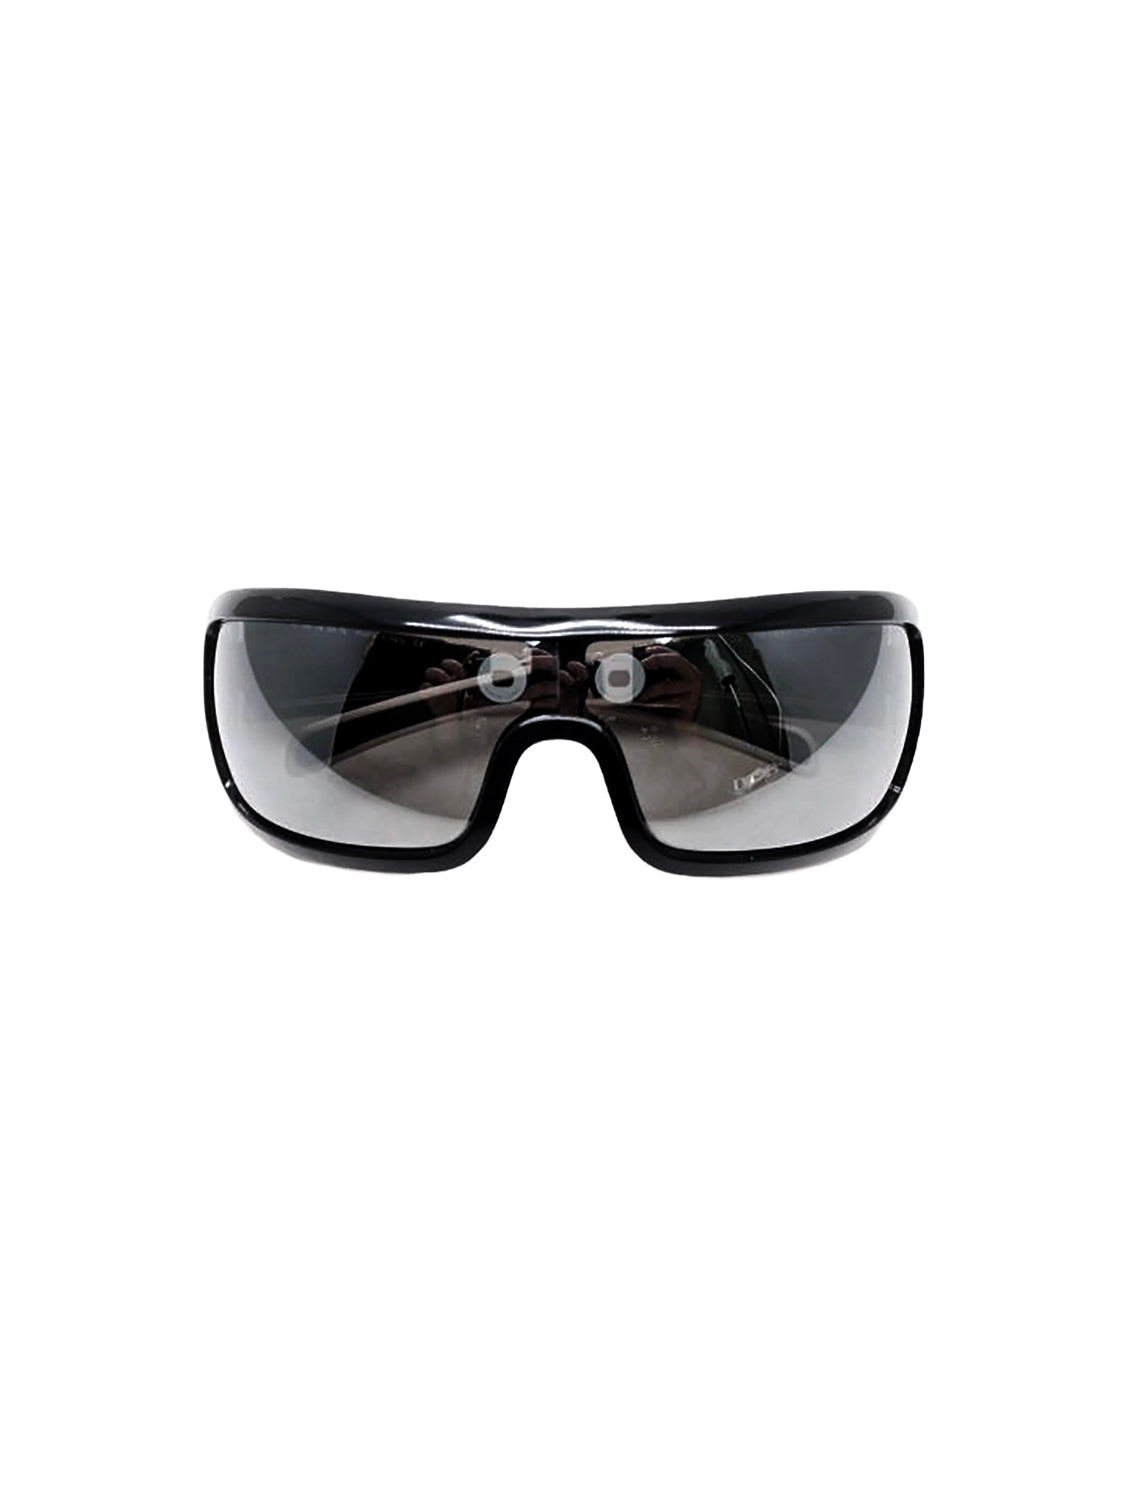 Prada 2000s Sports Rare Black Sunglasses